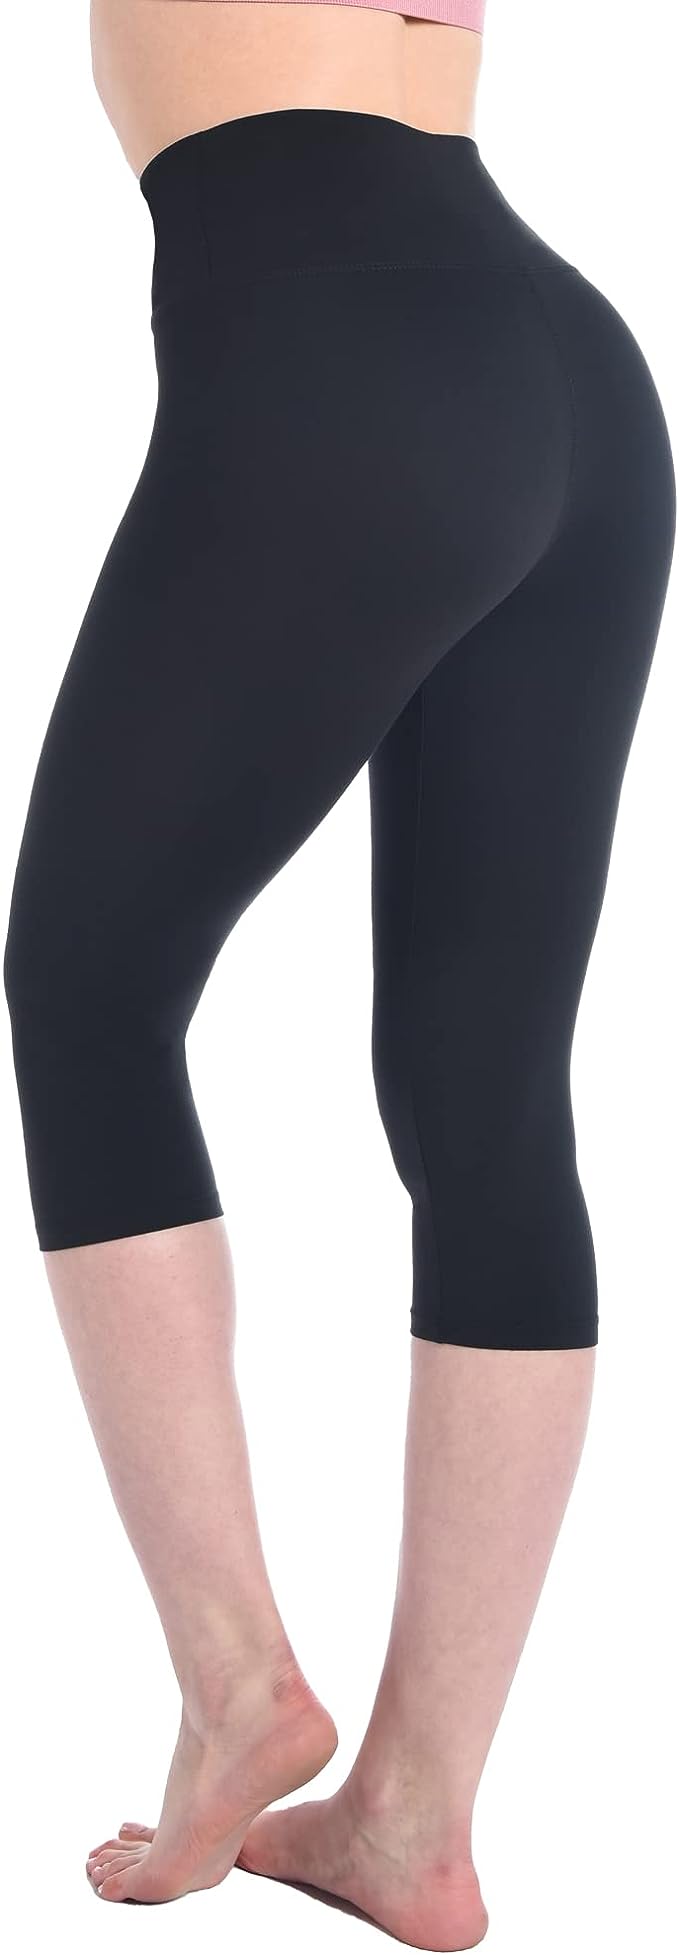 Women's High Waist 3/4 Leggings Opaque Black for Sports Gym Yoga – SINOPHANT